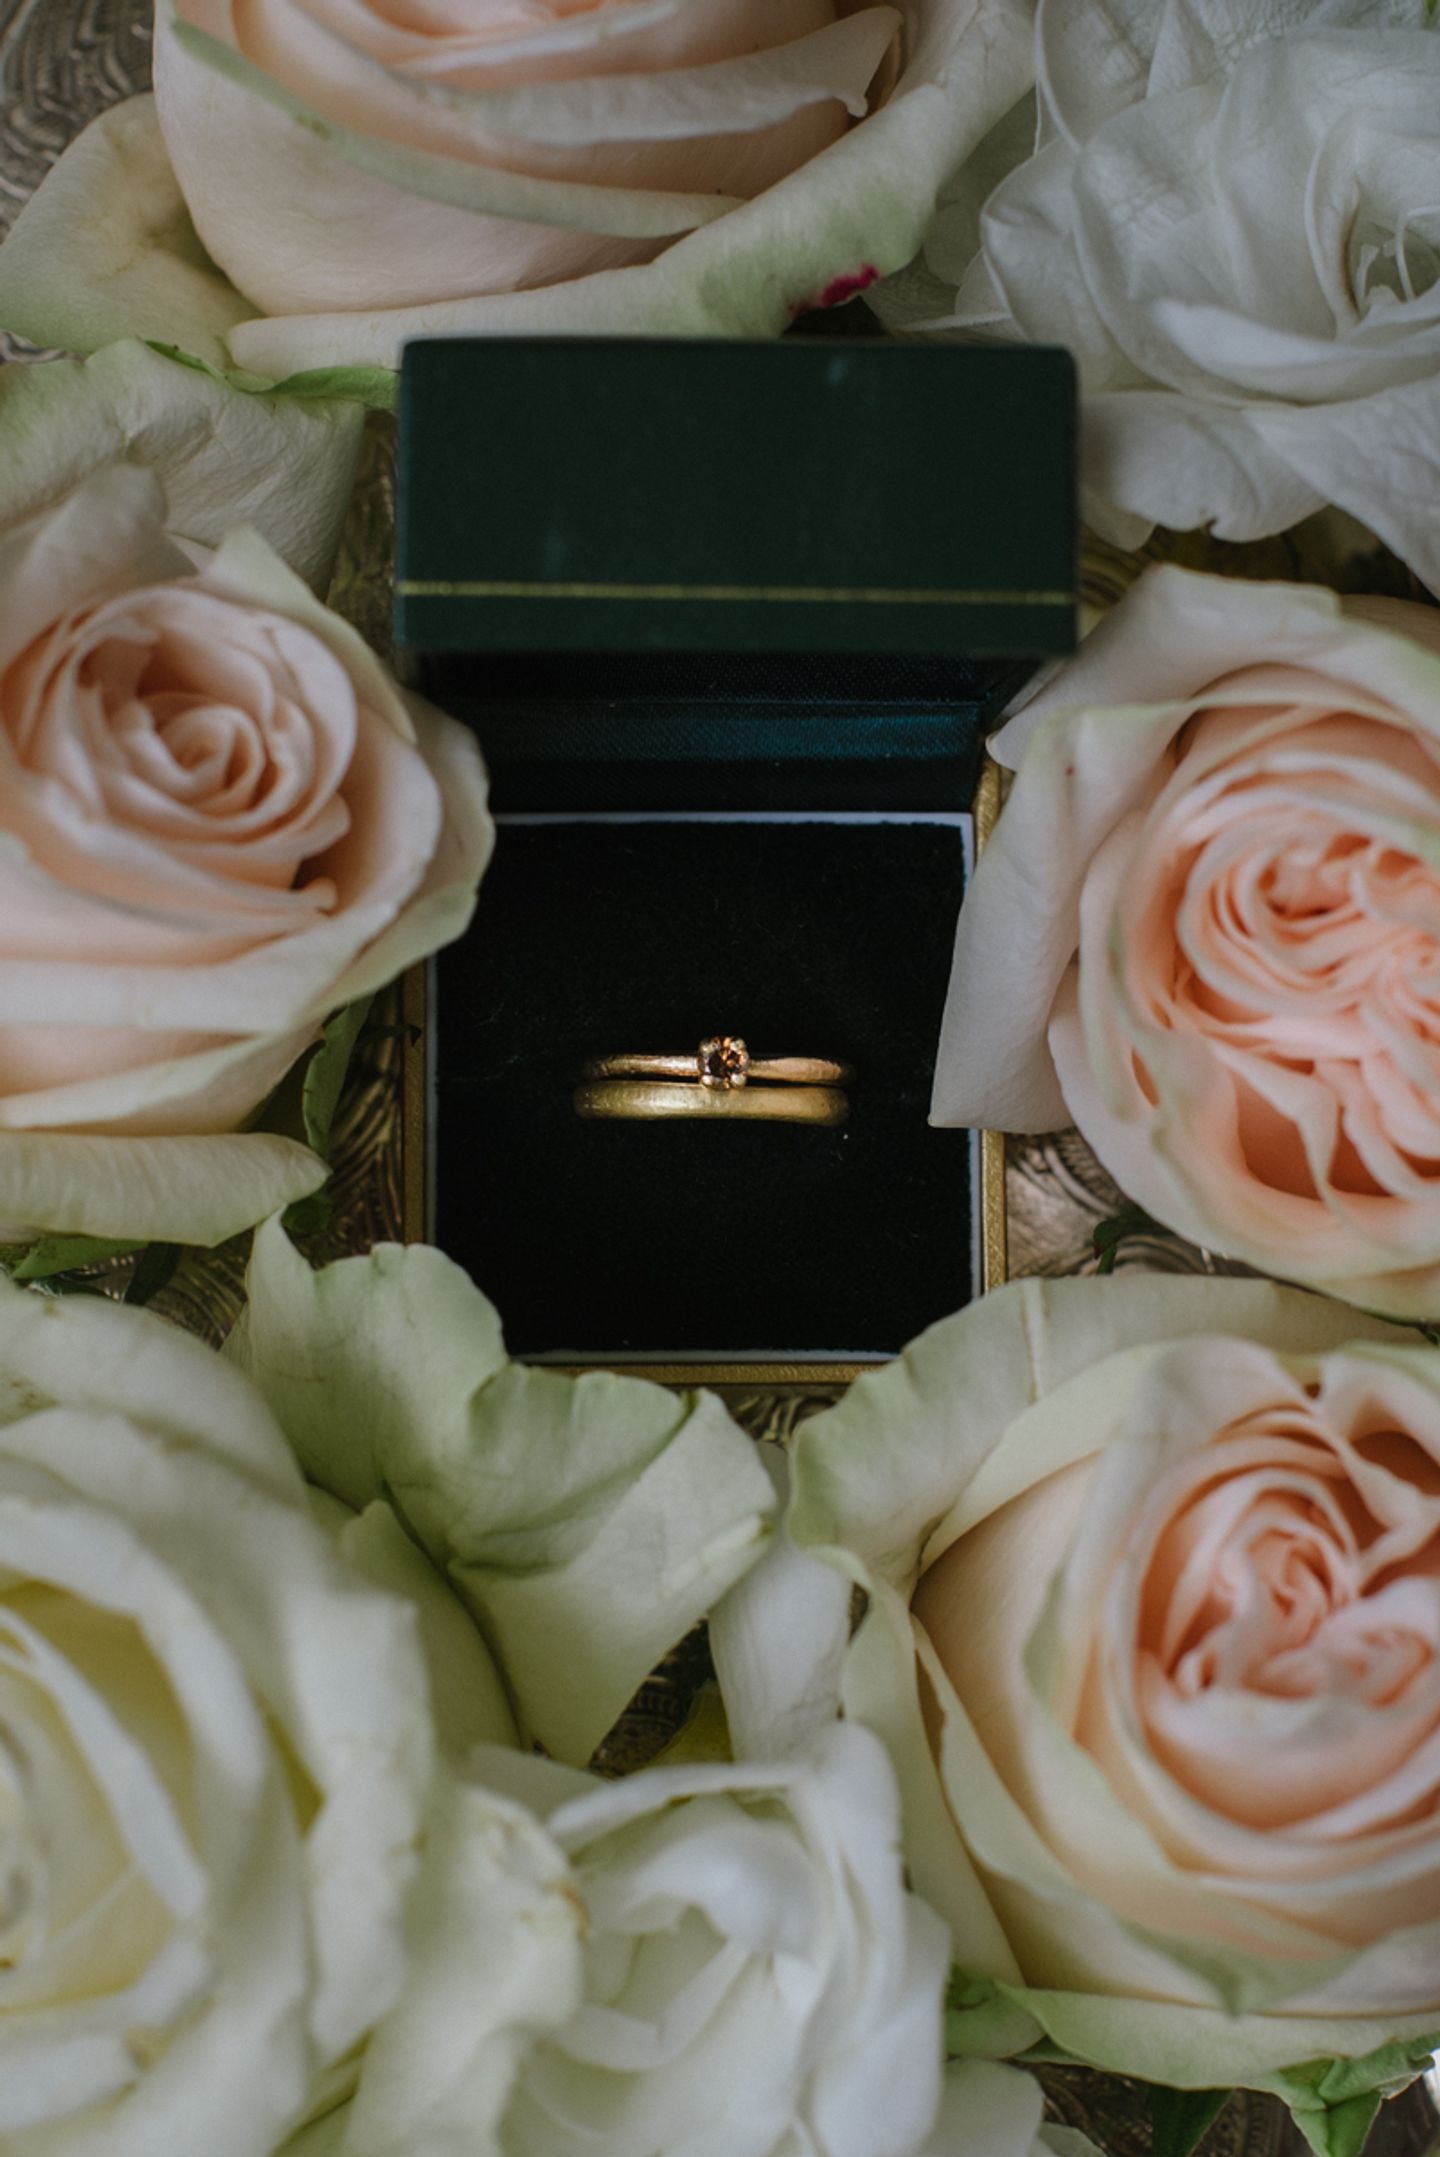 Yellow gold and brown diamond bridal ring set, vintage ring box and roses